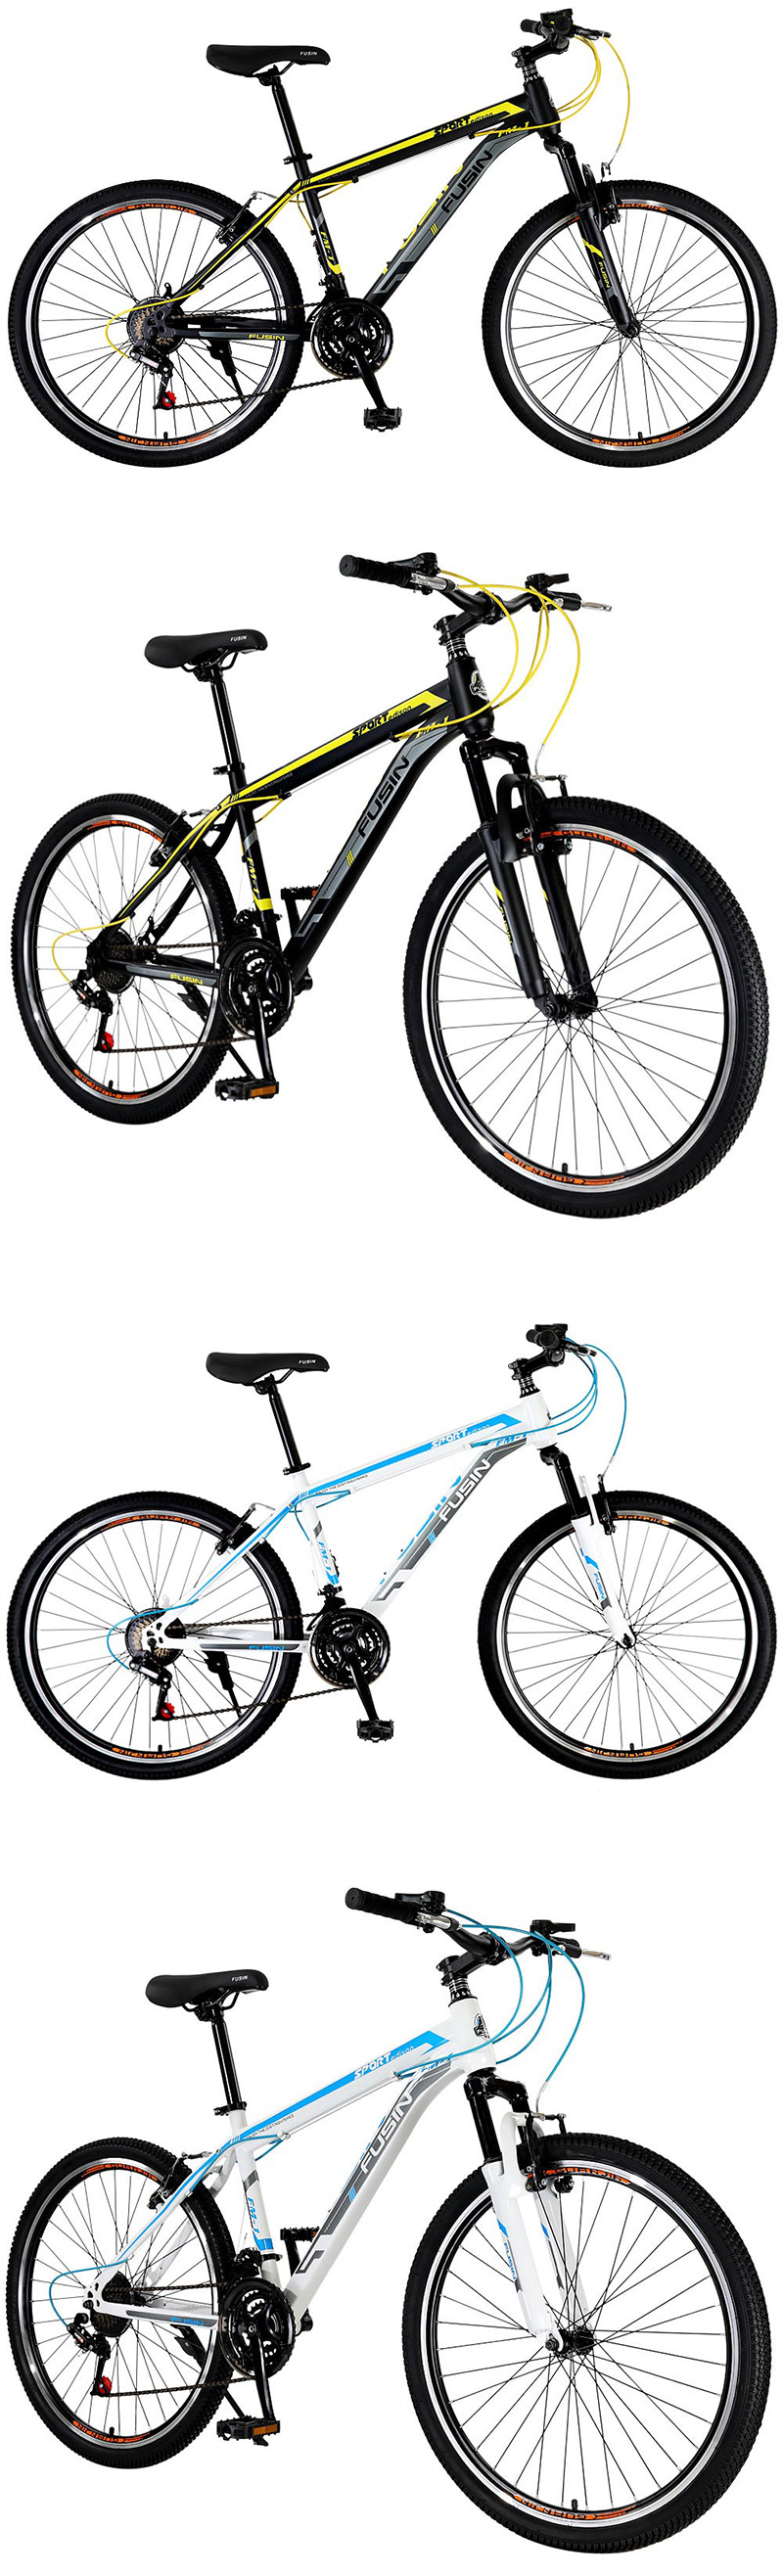 【FUSIN】 26吋高碳鋼V夾搭配無定位21速登山車FM-1/腳踏車/變速車